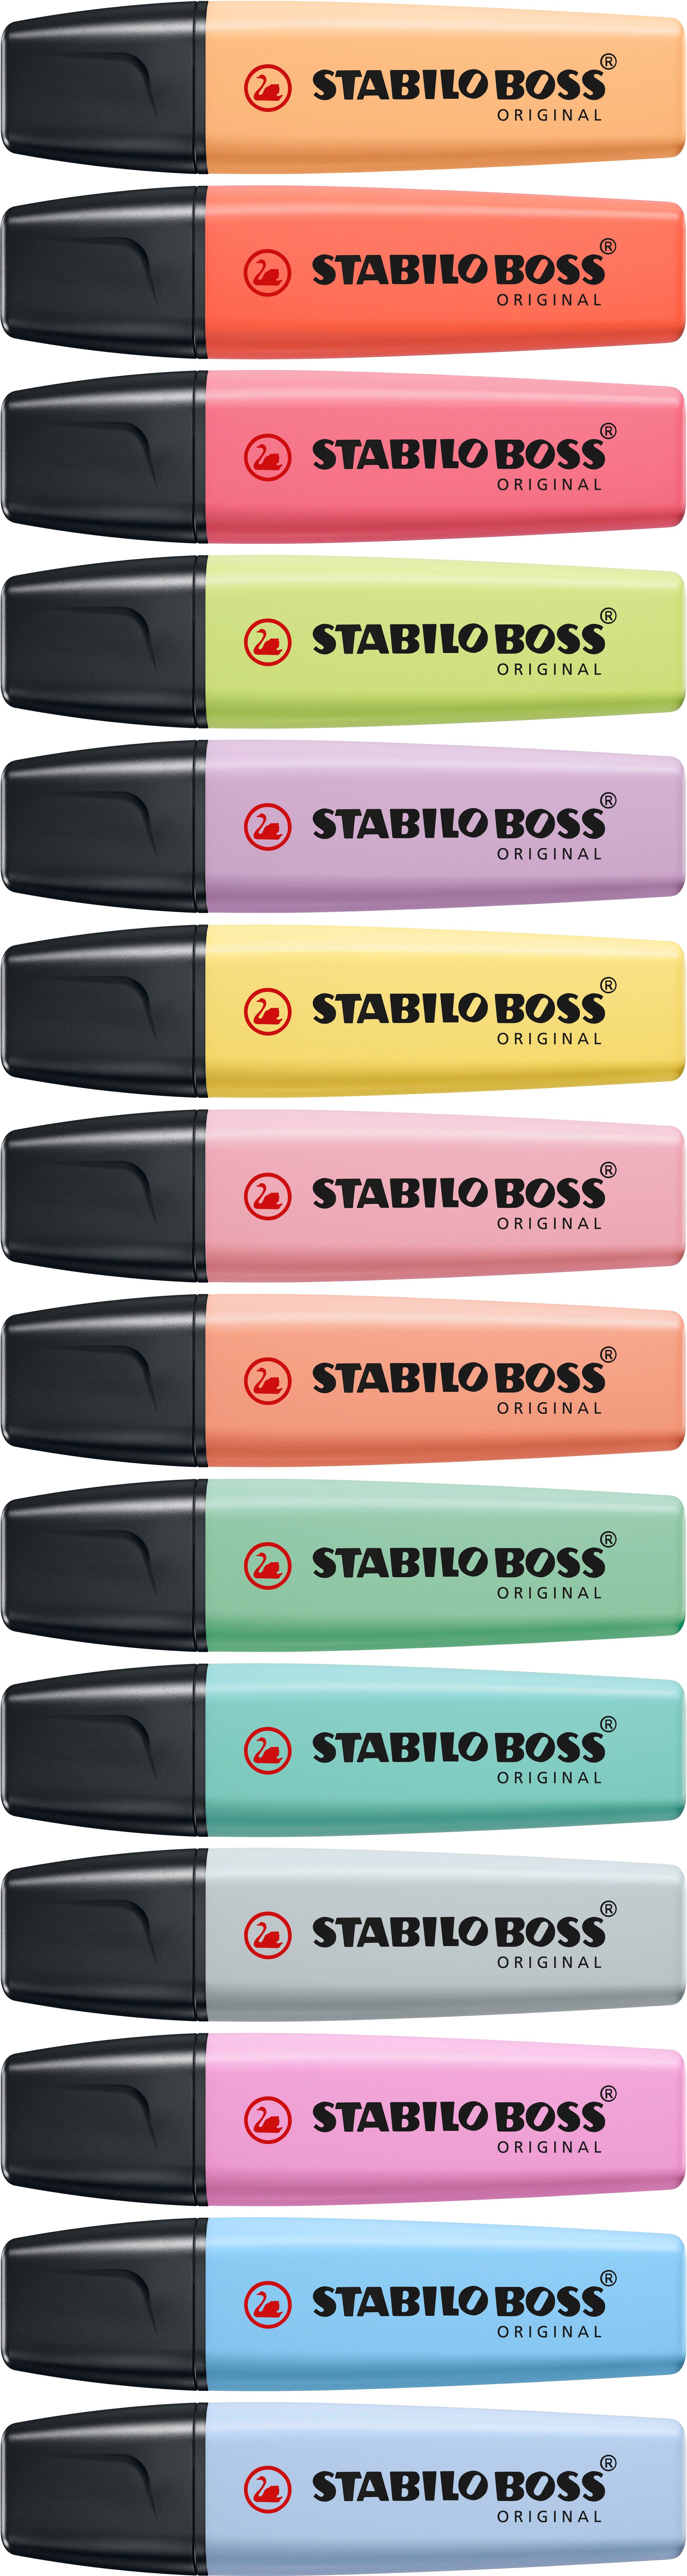 Highlighter STABILO BOSS ORIGINAL Pastel | STABILO